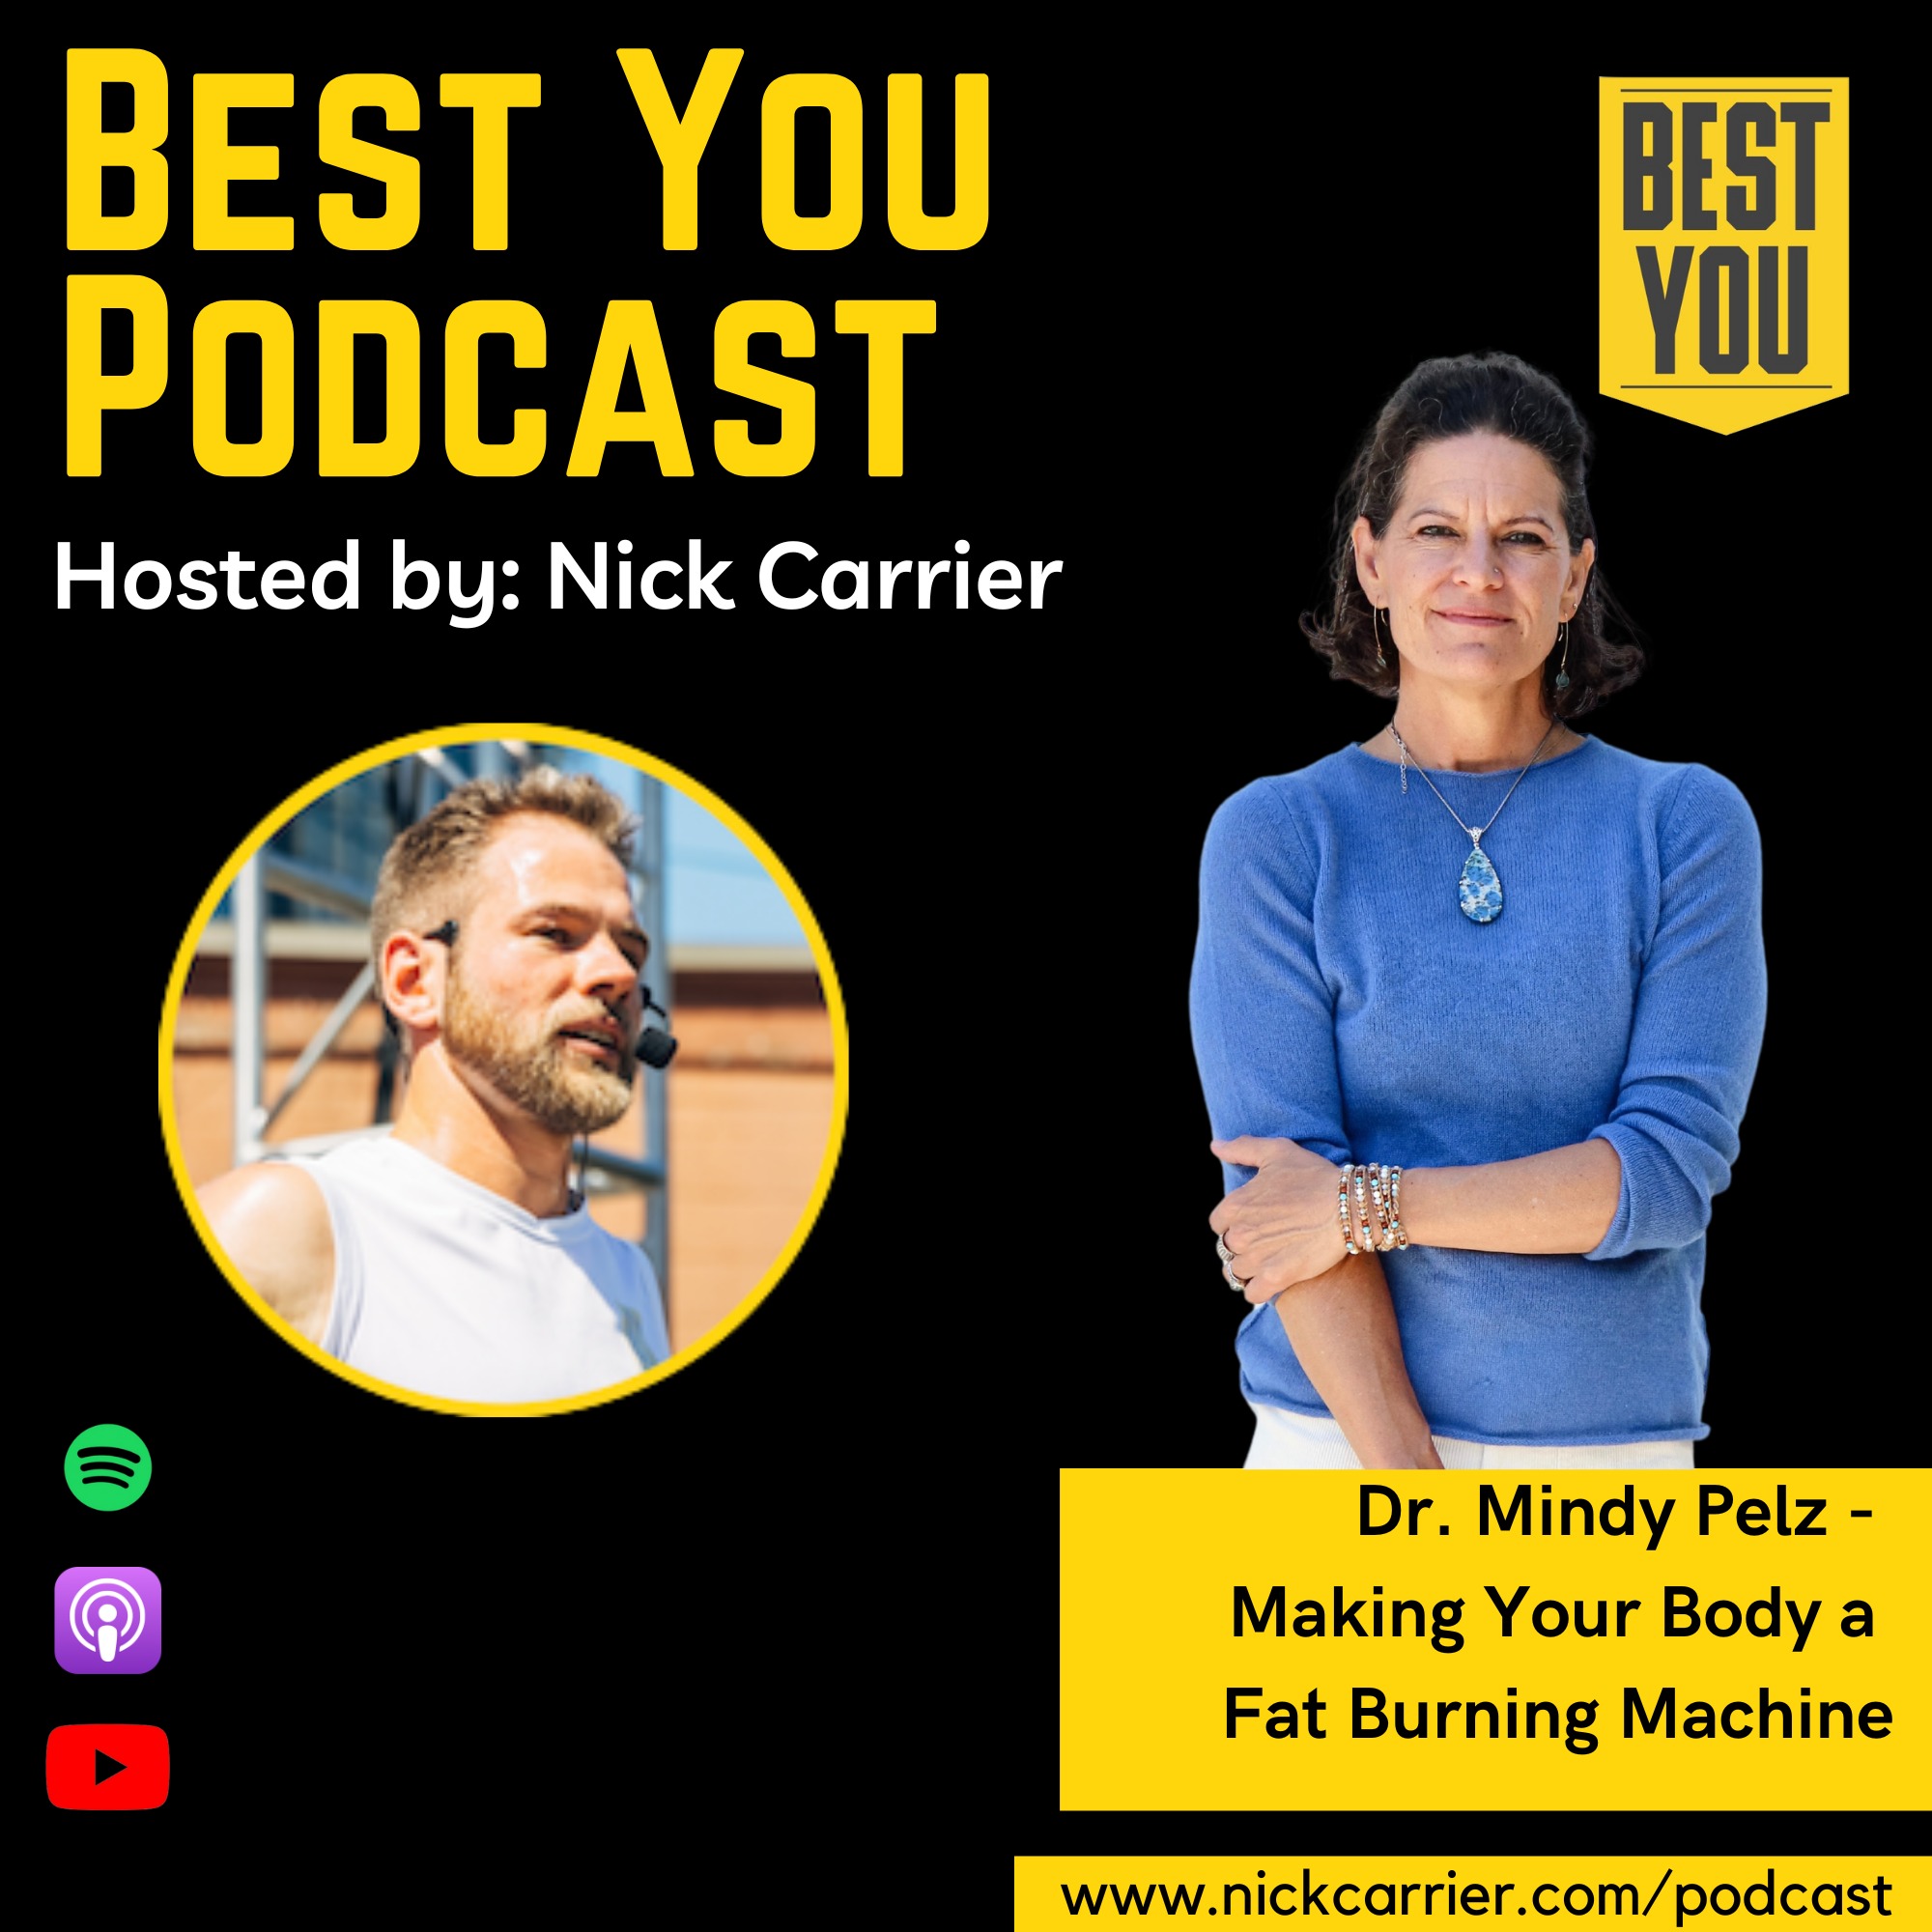 Dr. Mindy Pelz - Making Your Body a Fat Burning Machine